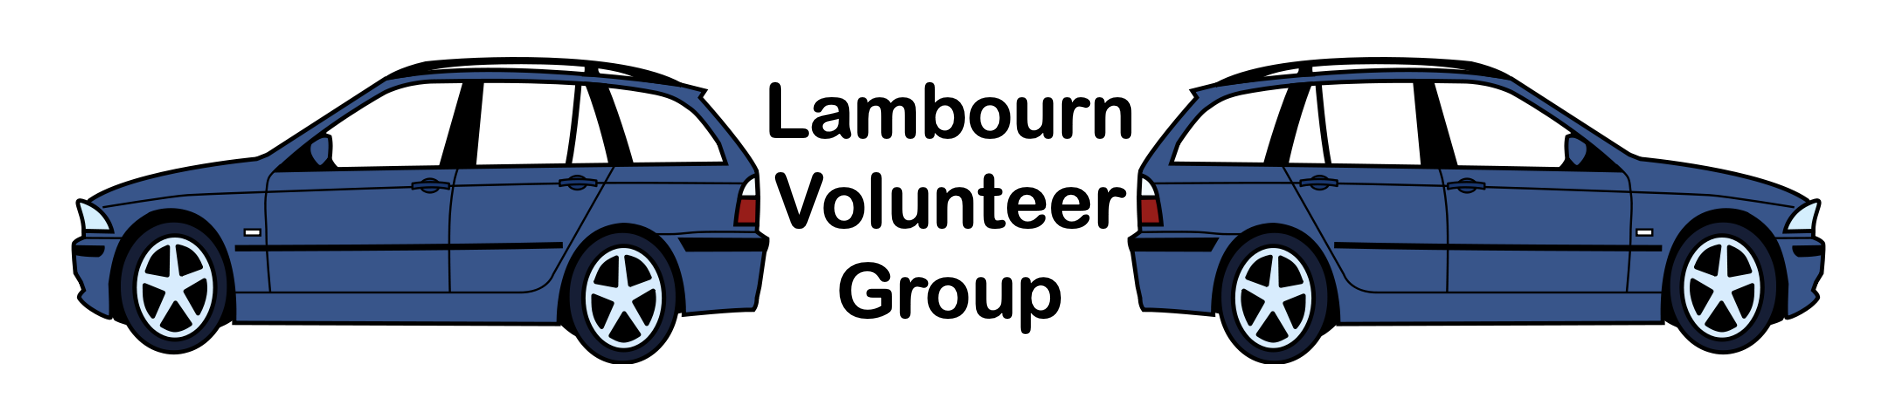 Lambourn Volunteer Group